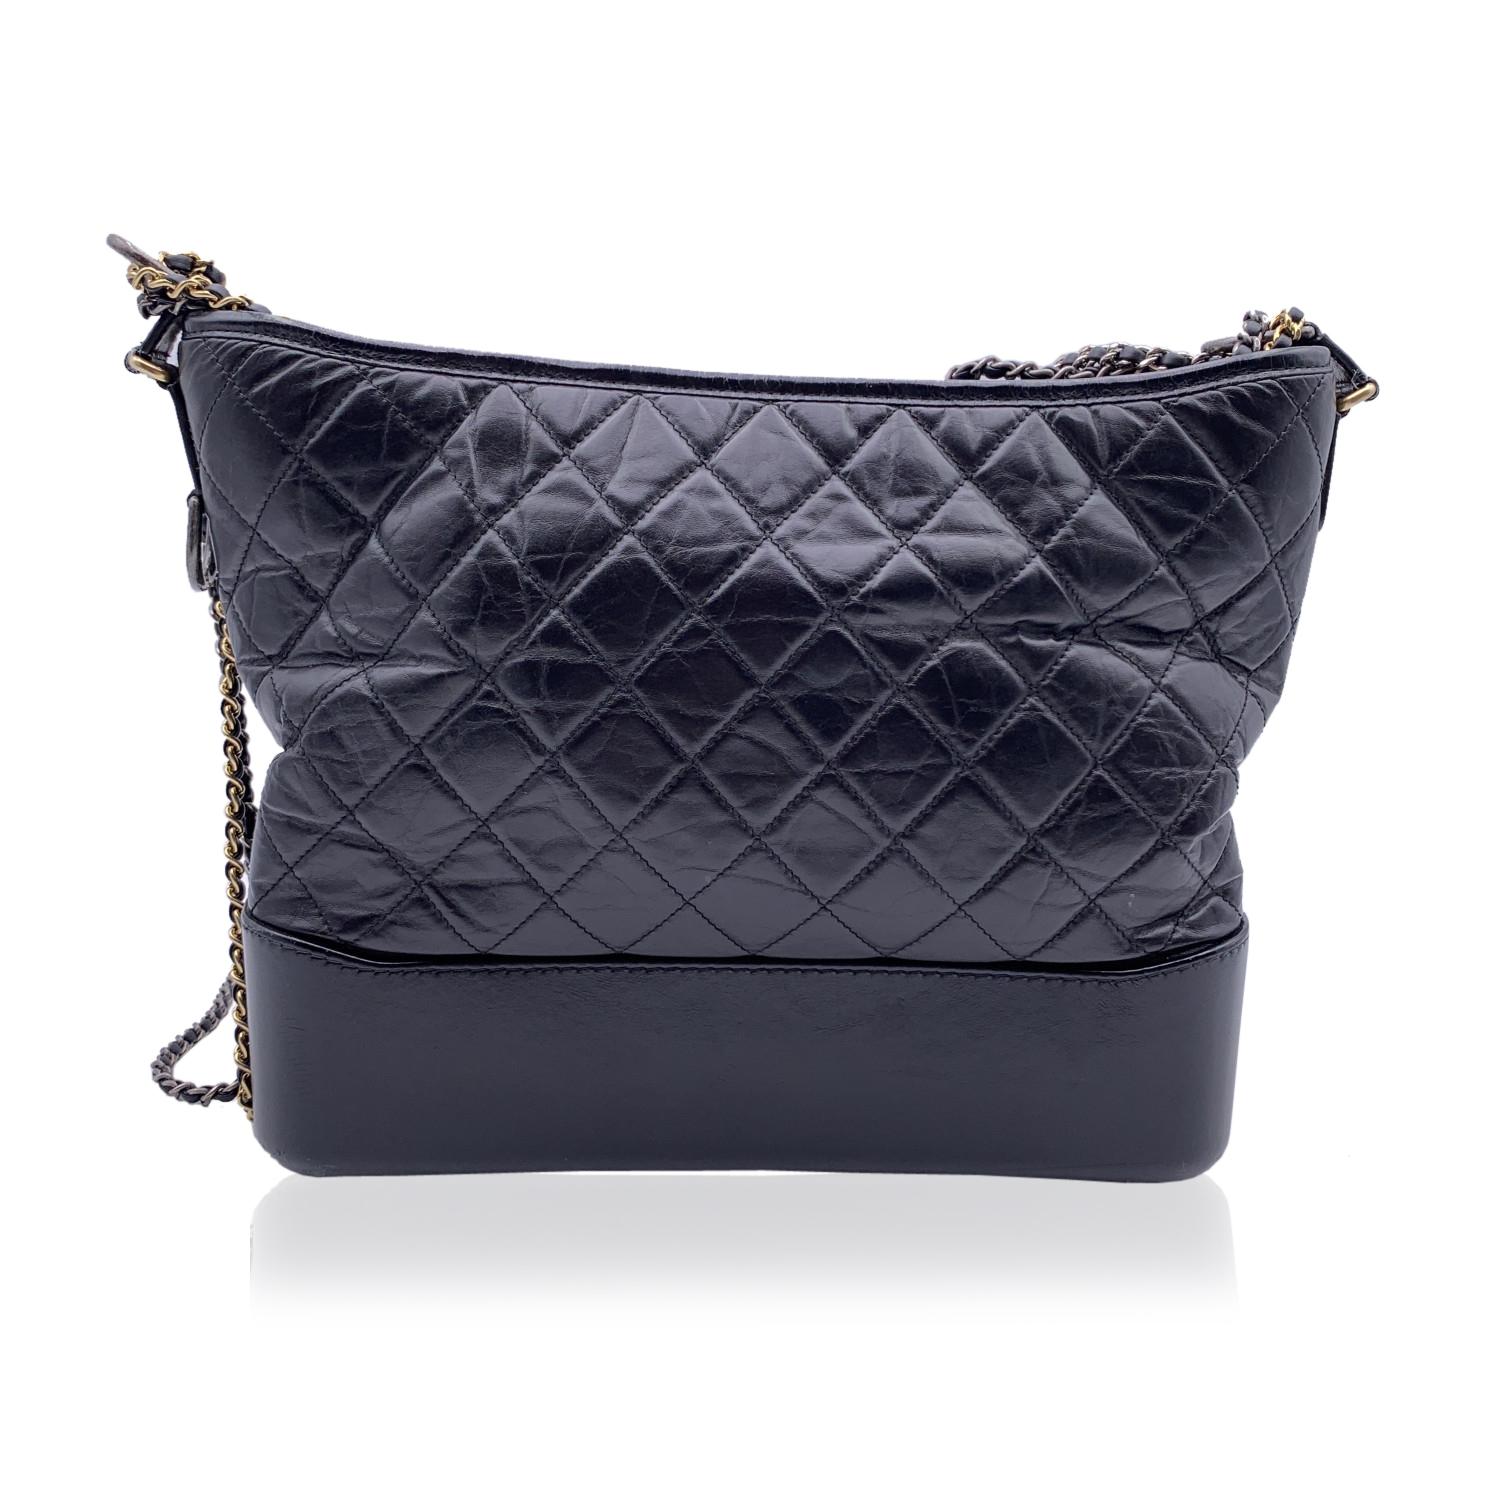 Women's Chanel Black Quilted Leather Gabrielle Large Hobo Shoulder Bag For Sale